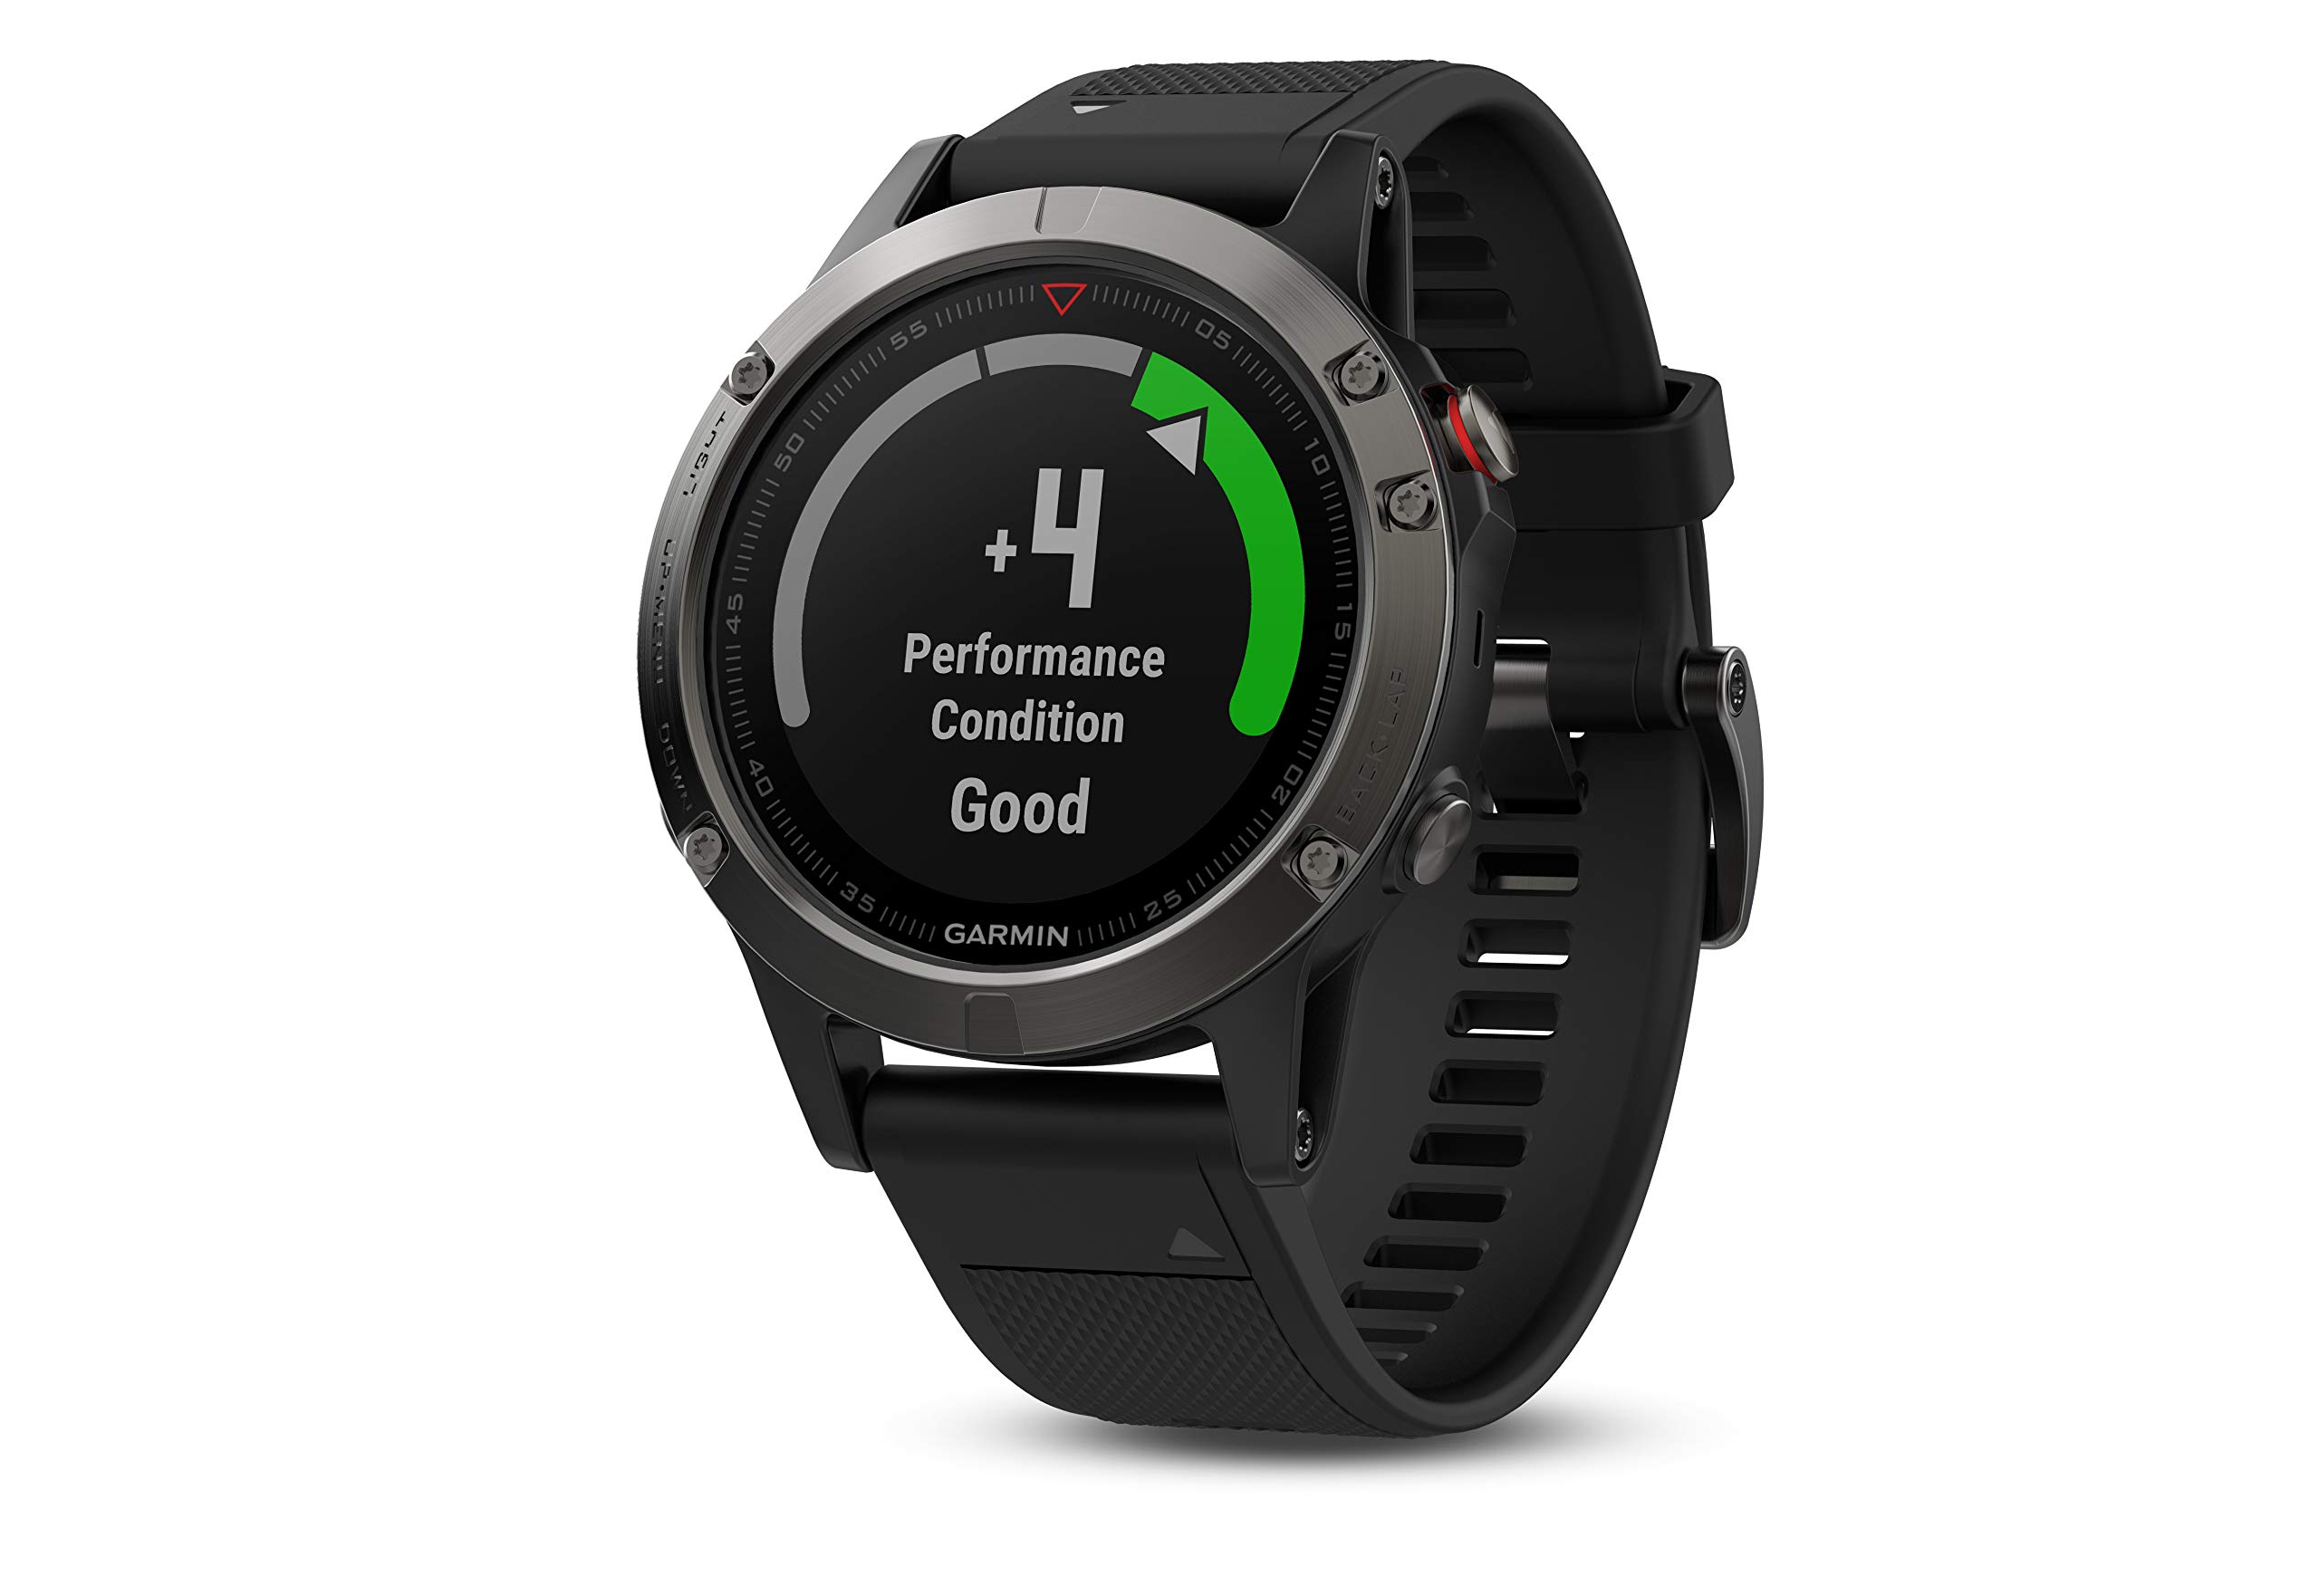 Garmin fēnix 5, Premium and Rugged Multisport GPS Smartwatch, Slate Gray/Black Band, 47 MM